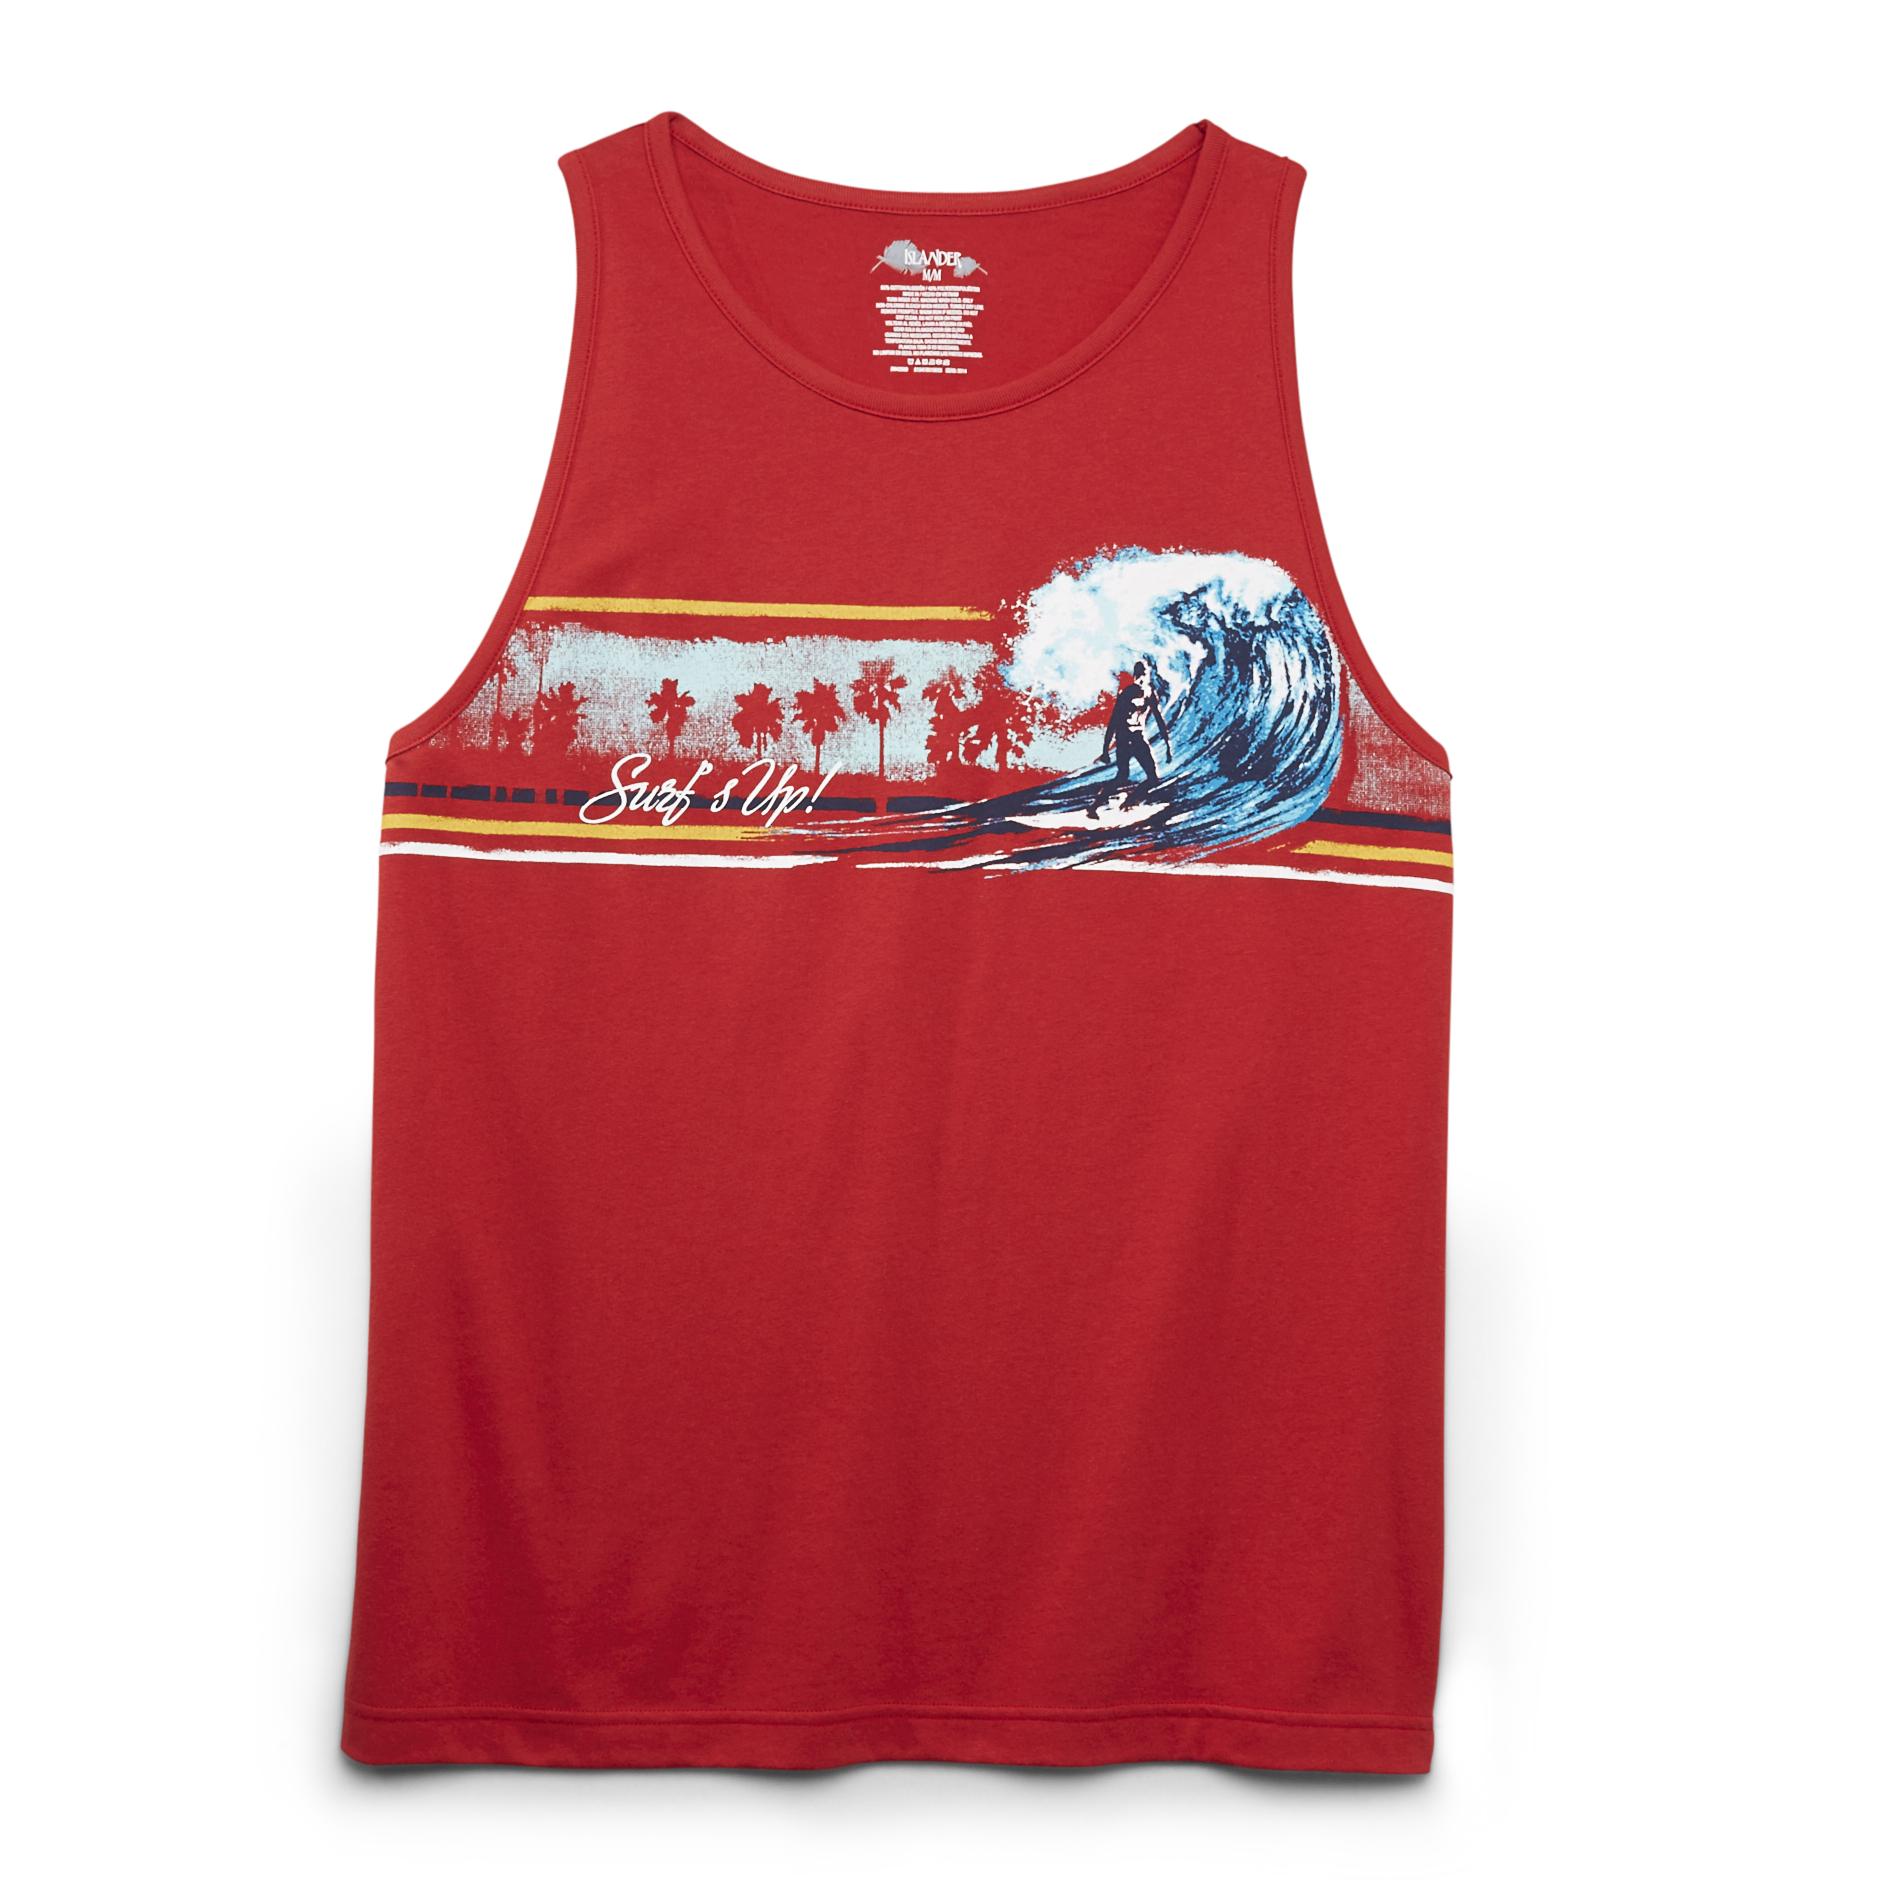 Islander Men's Sleeveless Graphic T-Shirt - Surfer